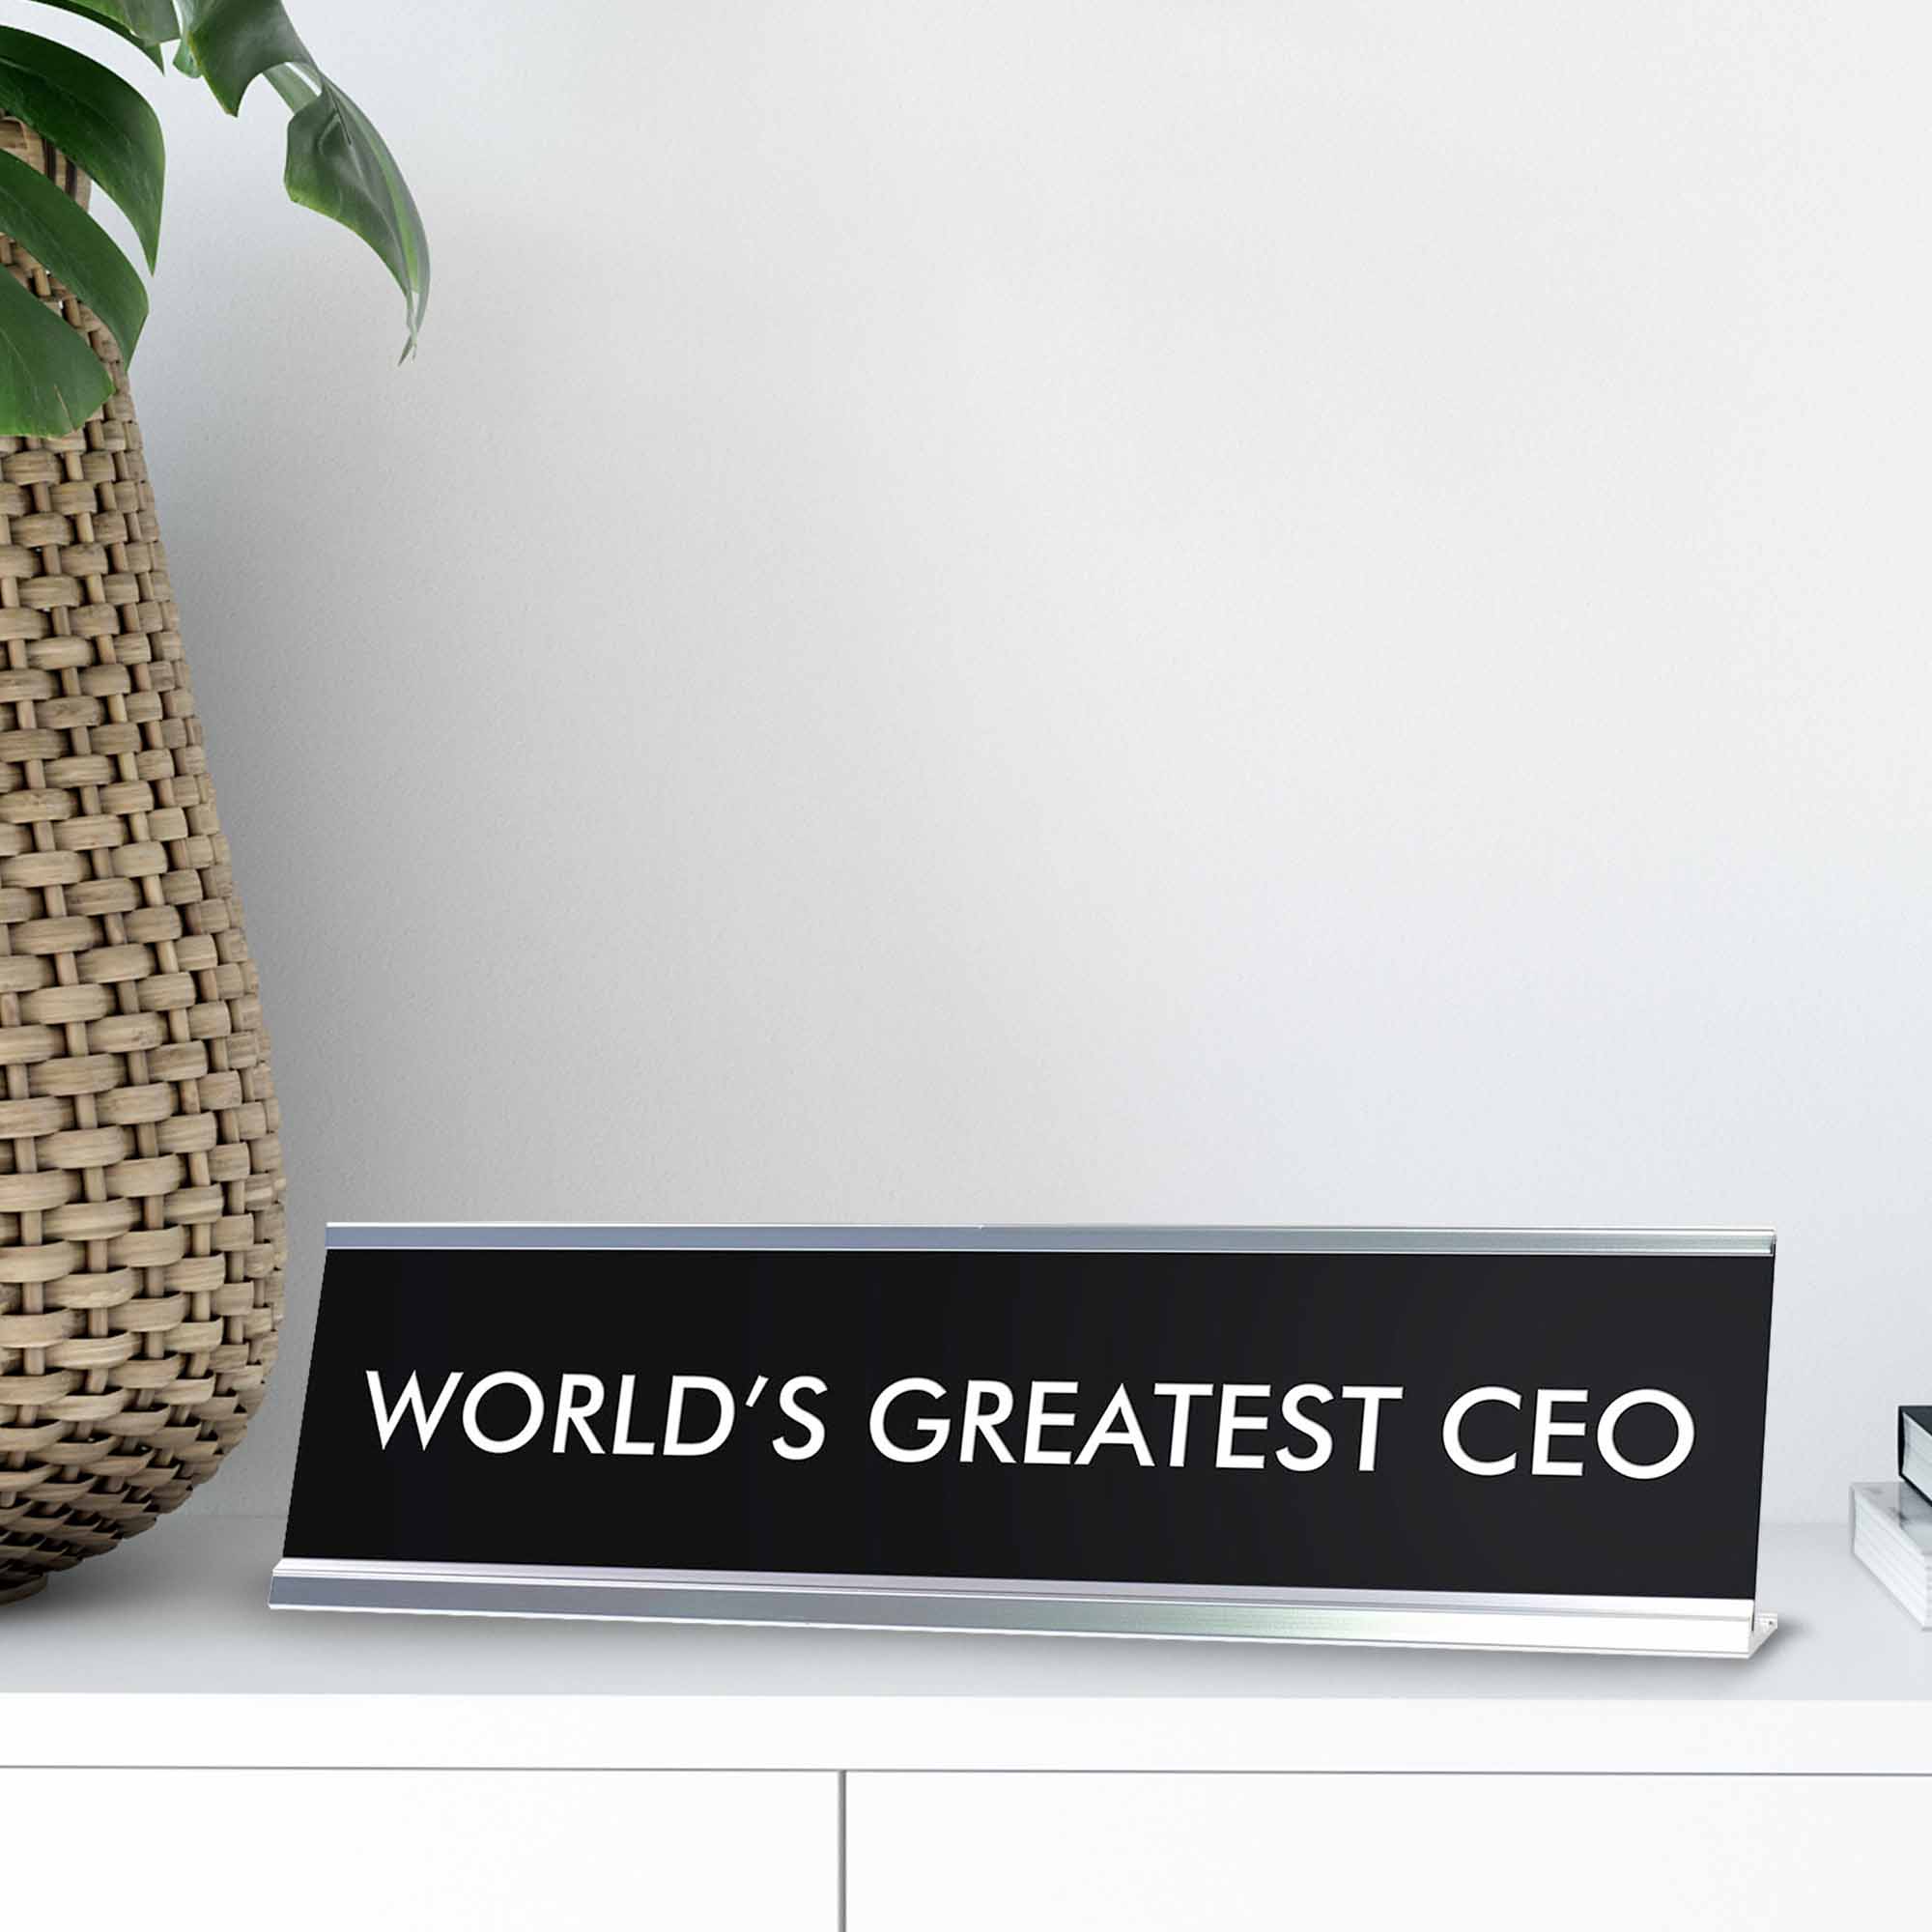 WORLD'S GREATEST CEO Novelty Desk Sign